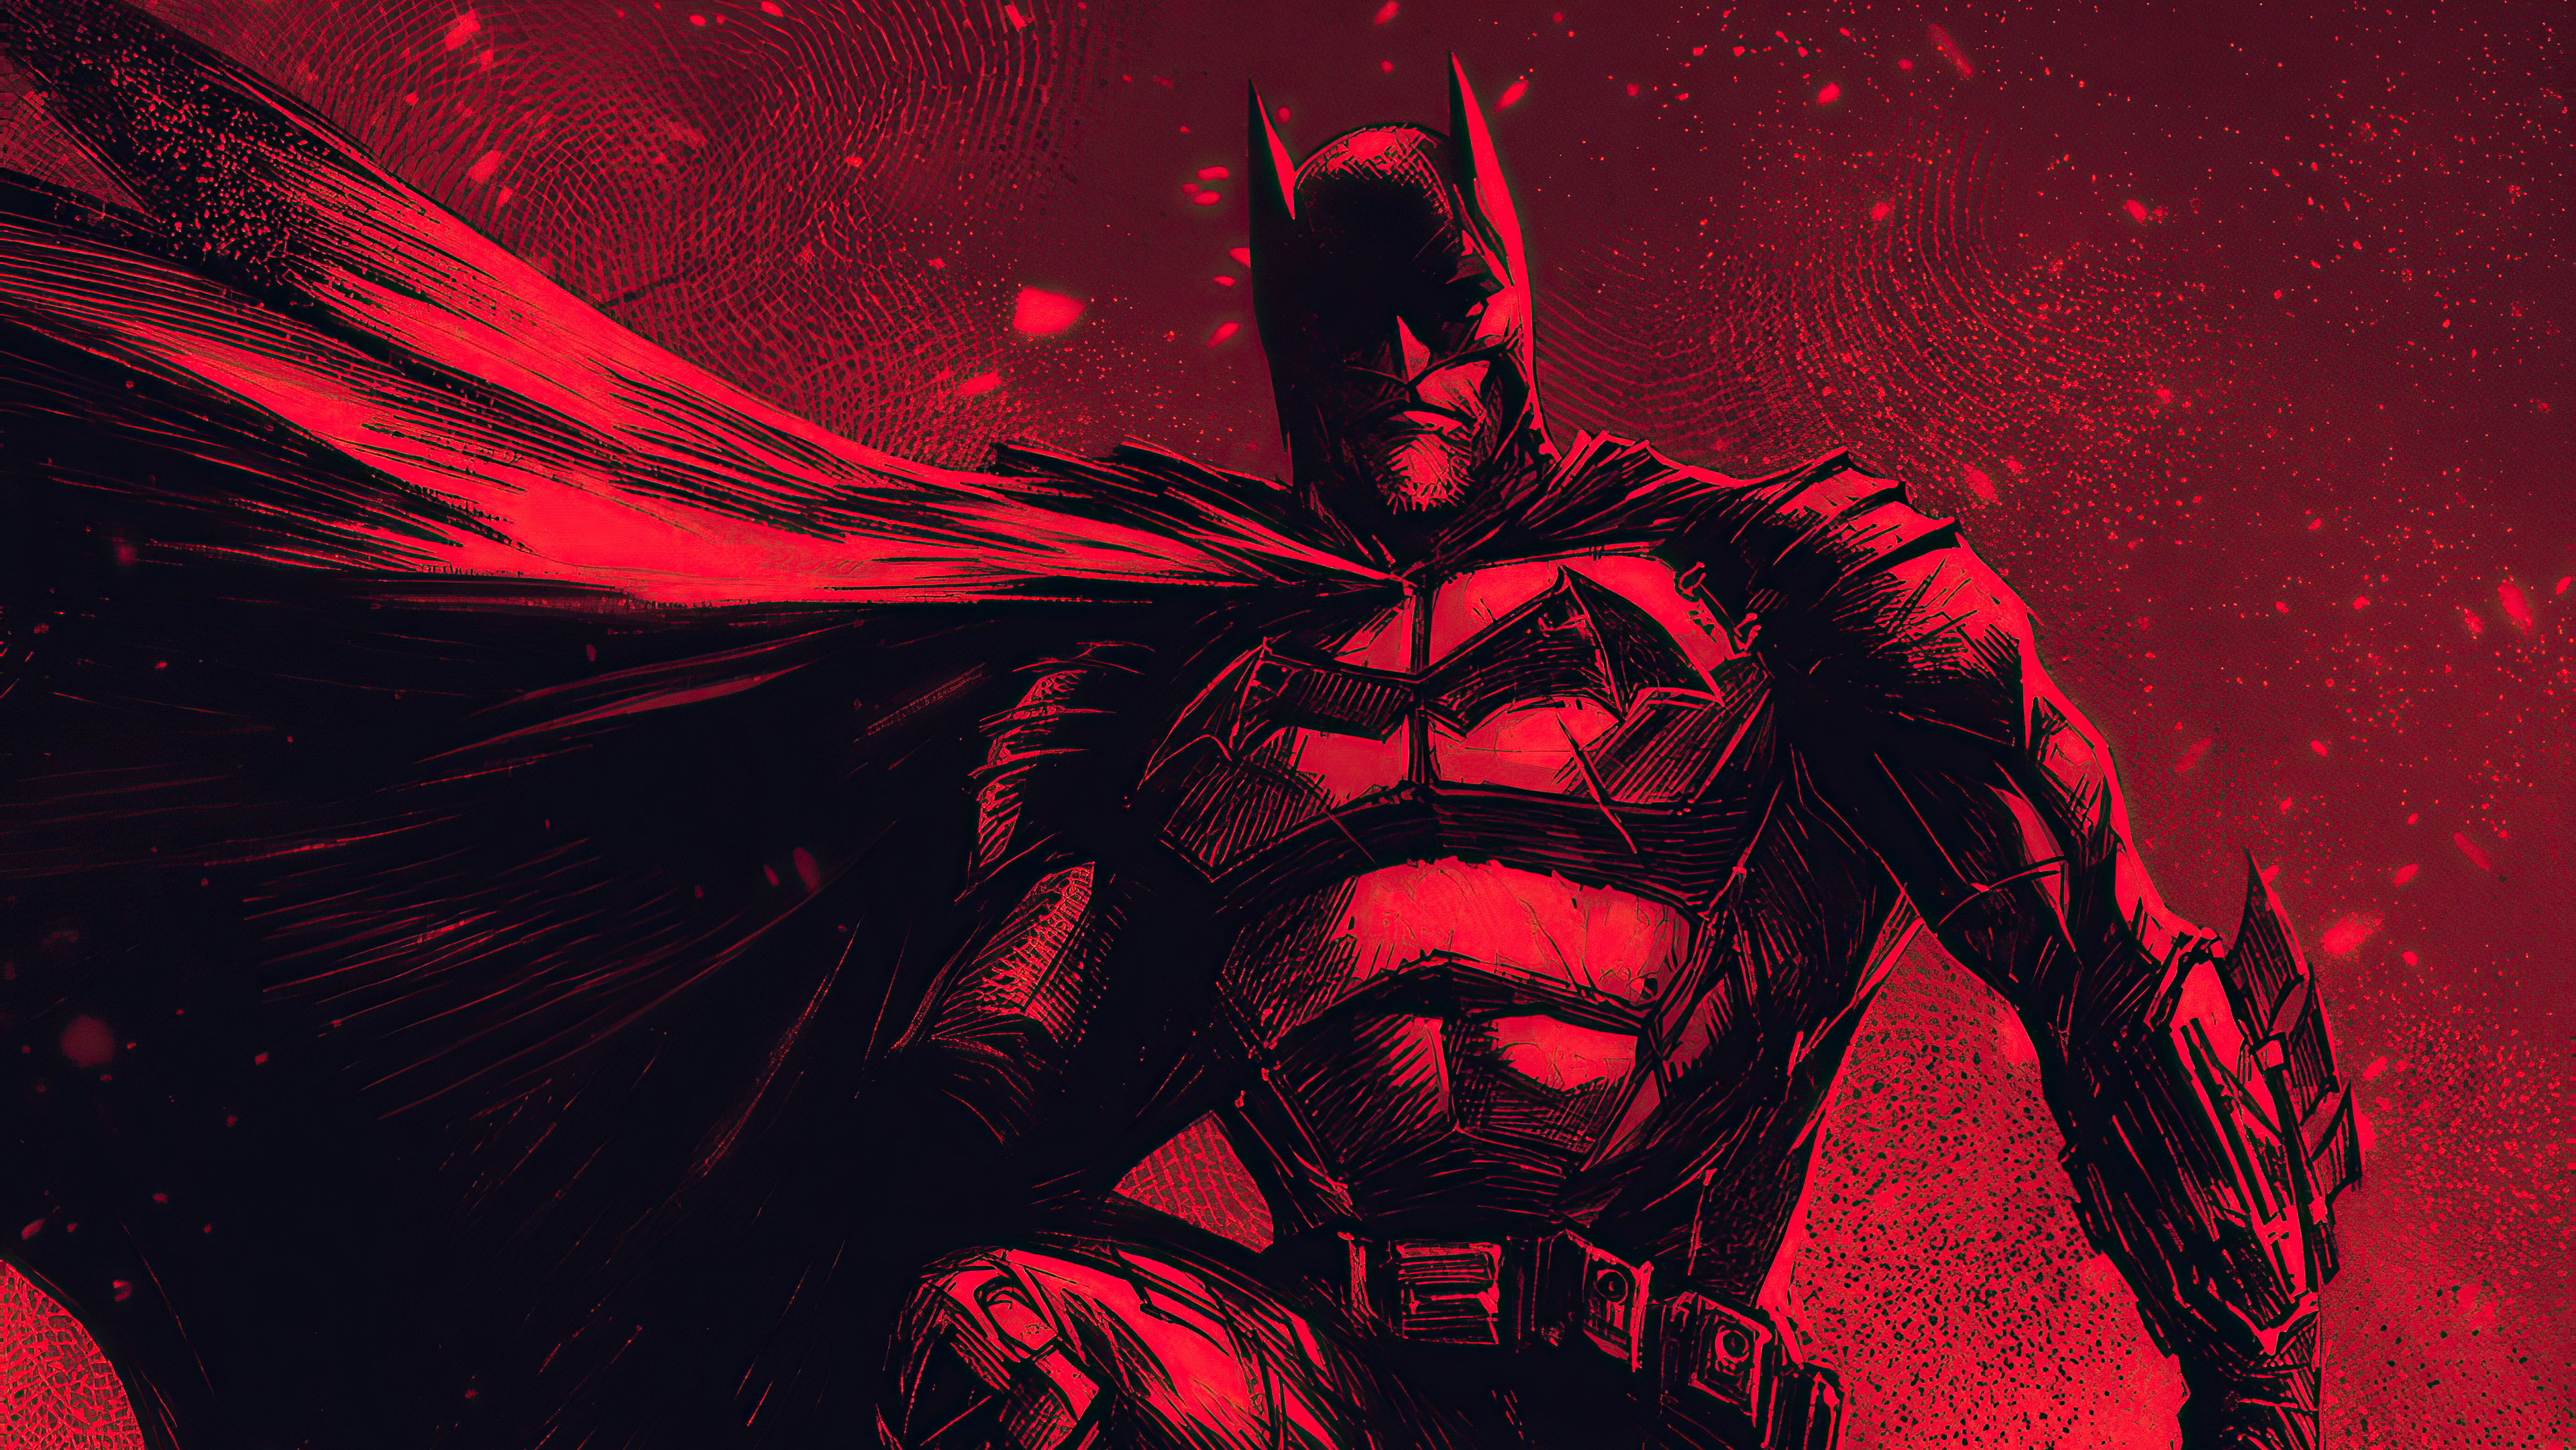 BatSignal Wallpaper 4K DC Comics Black background 7940